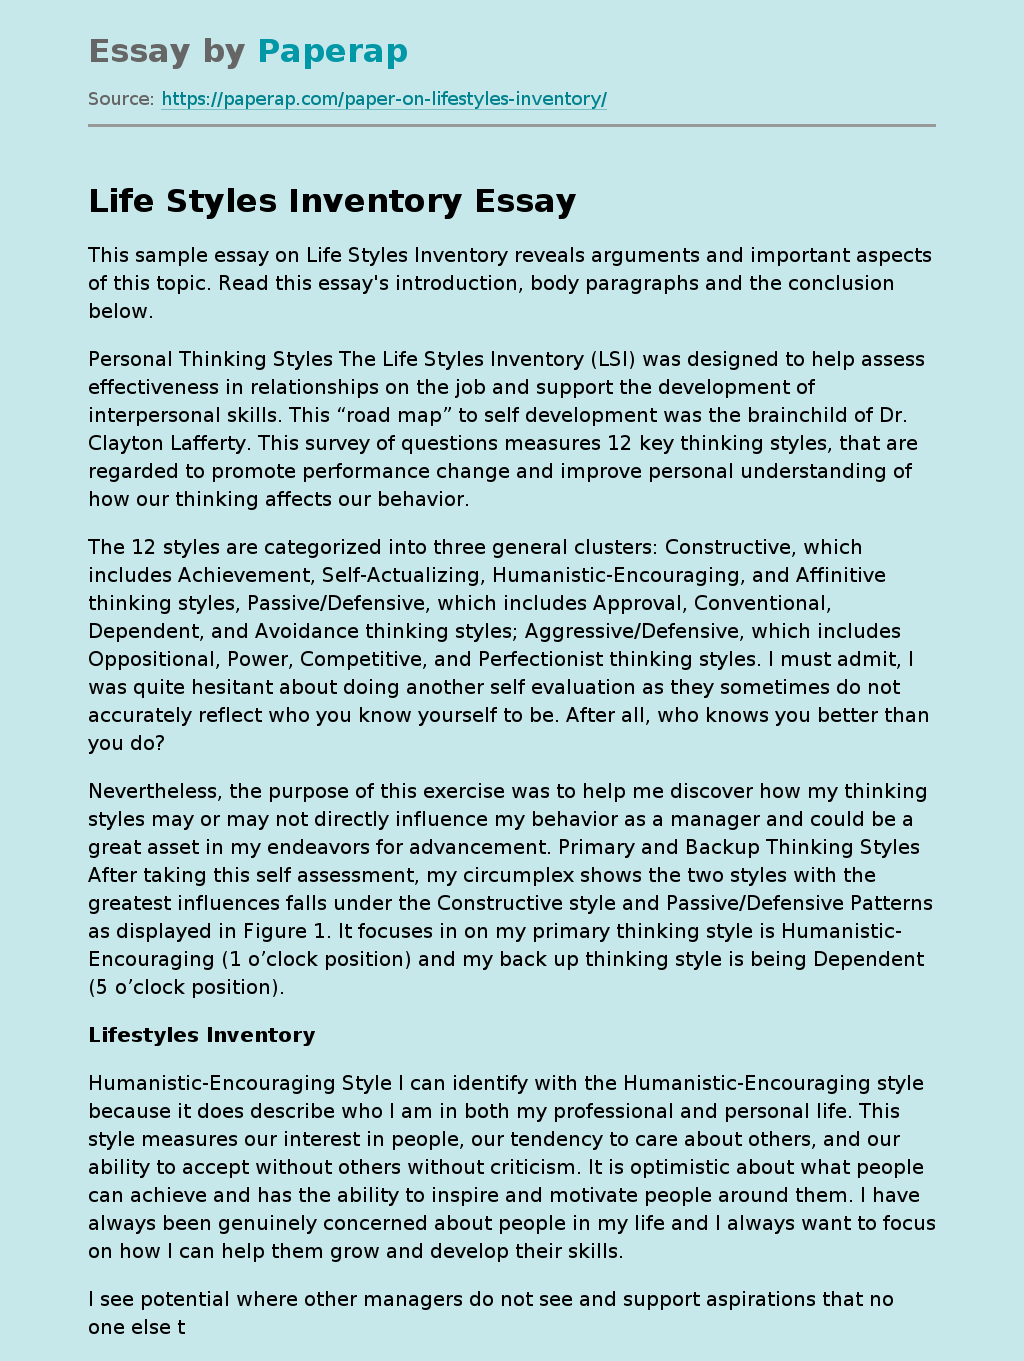 Essay on Lifestyle Inventory